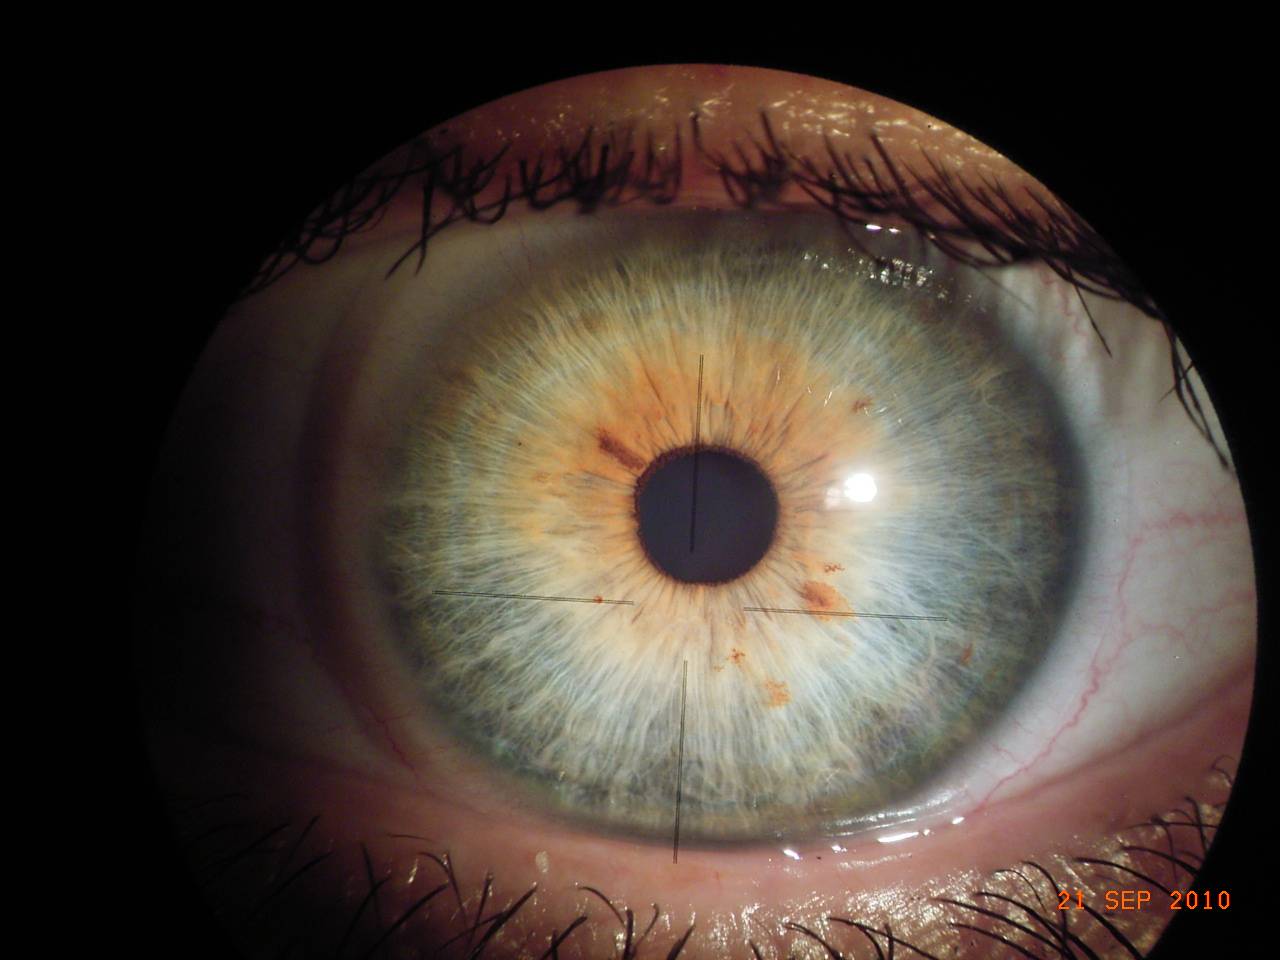 Augen- und Irisdiagnose